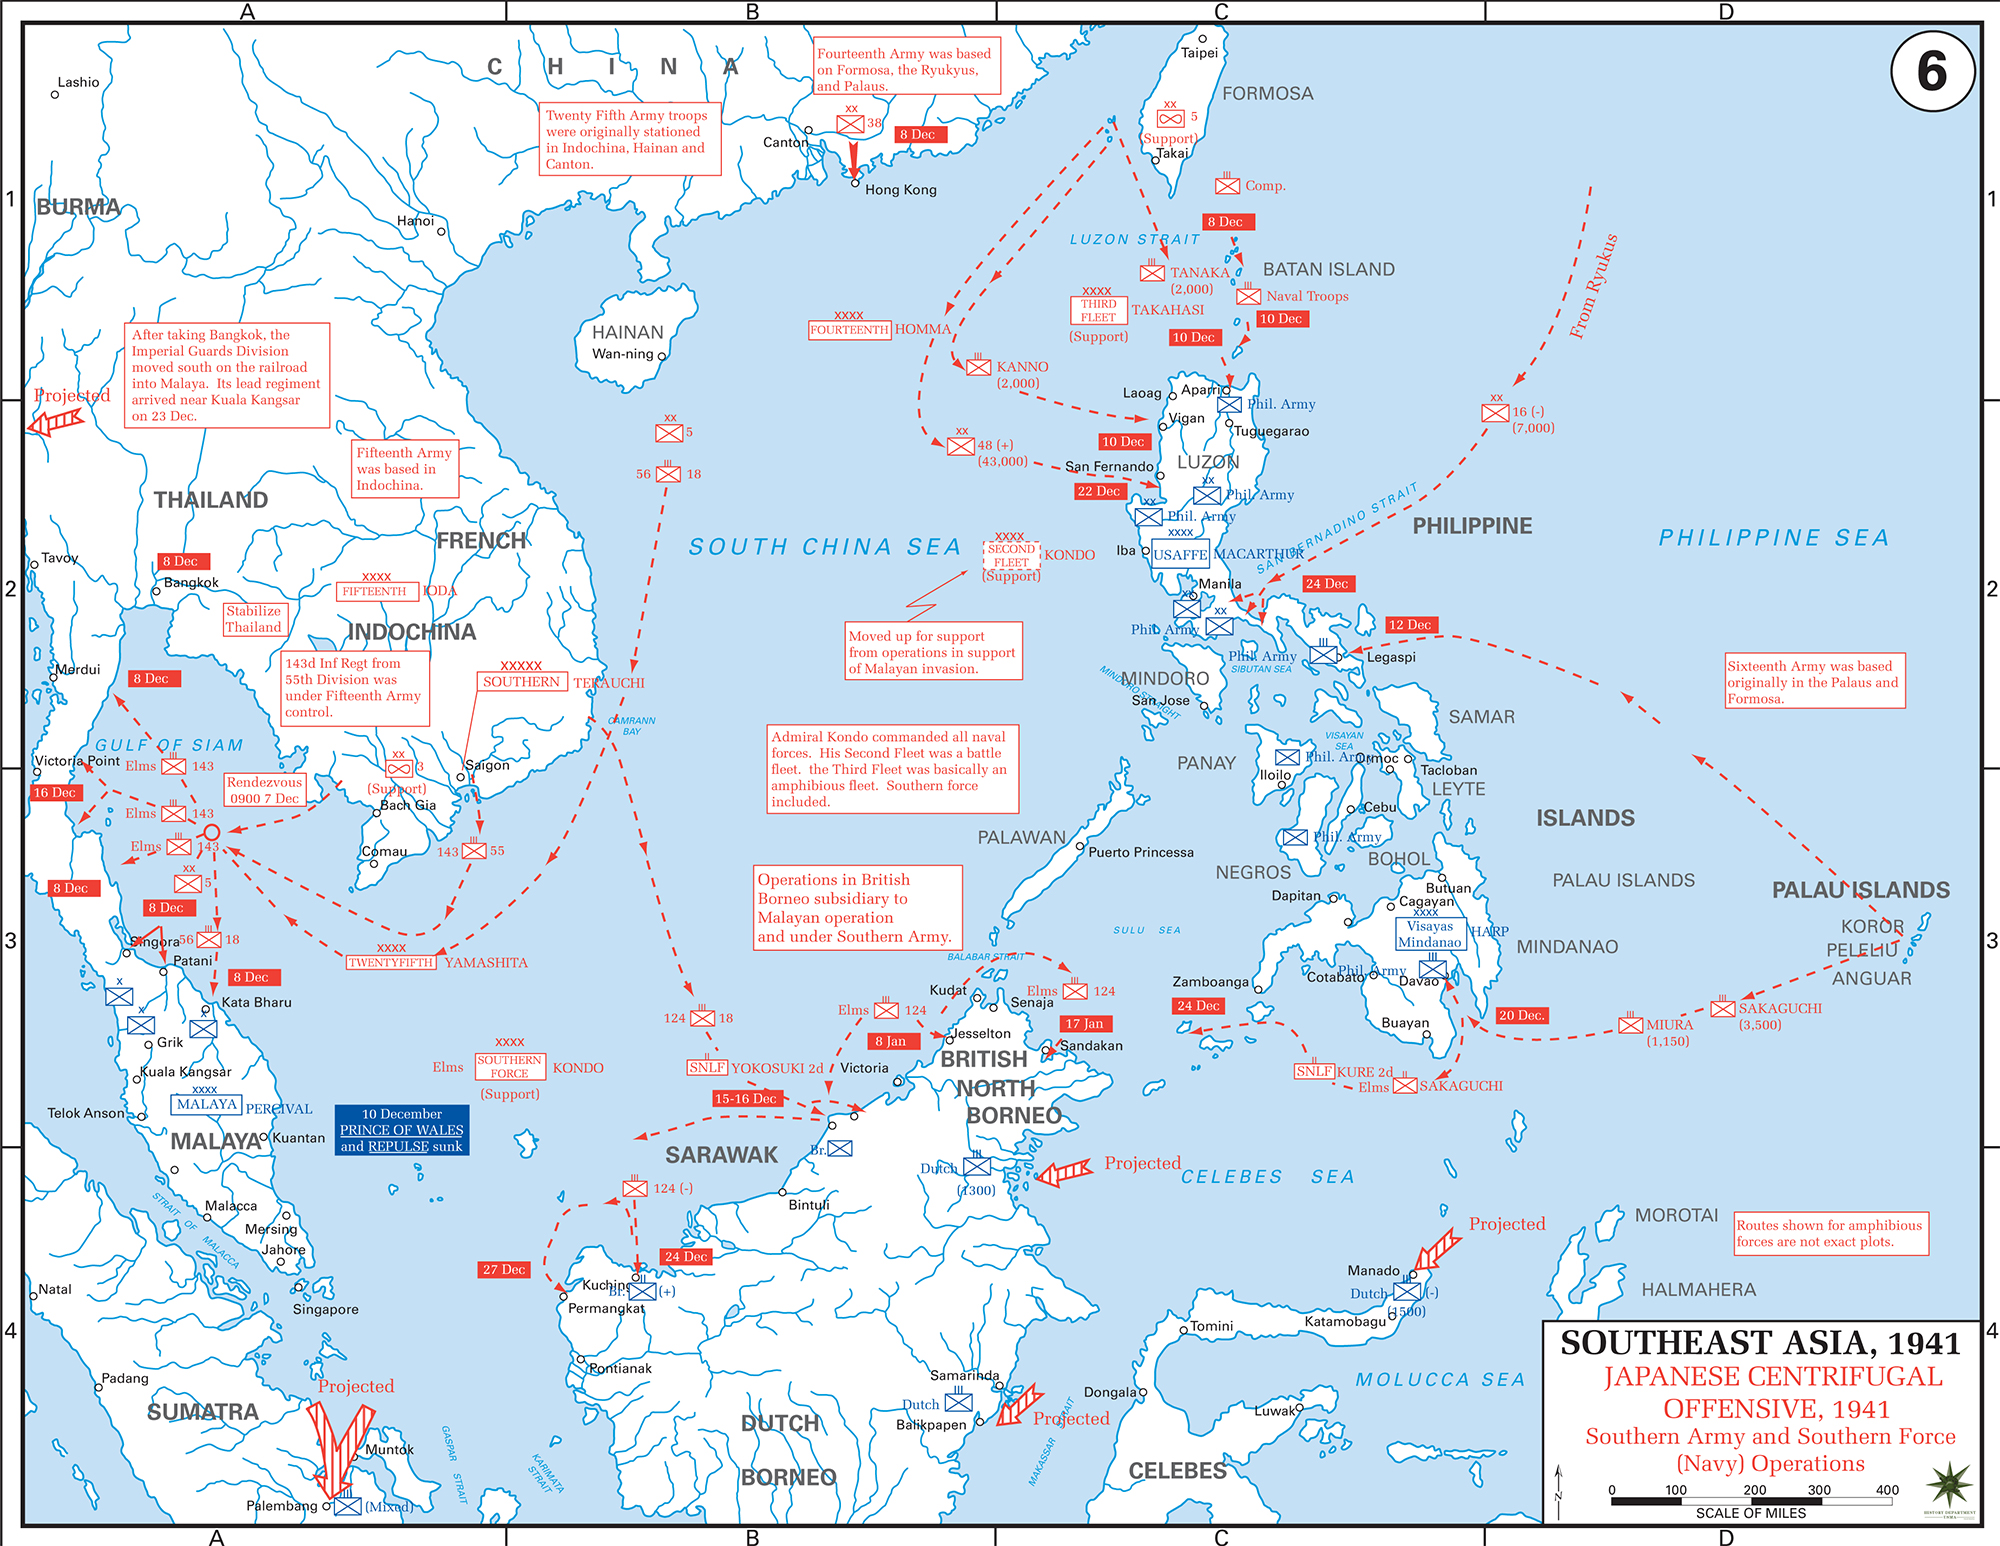 Map of World War II: Southeast Asia. Japanese Centrifugal Offensive, December 1941.